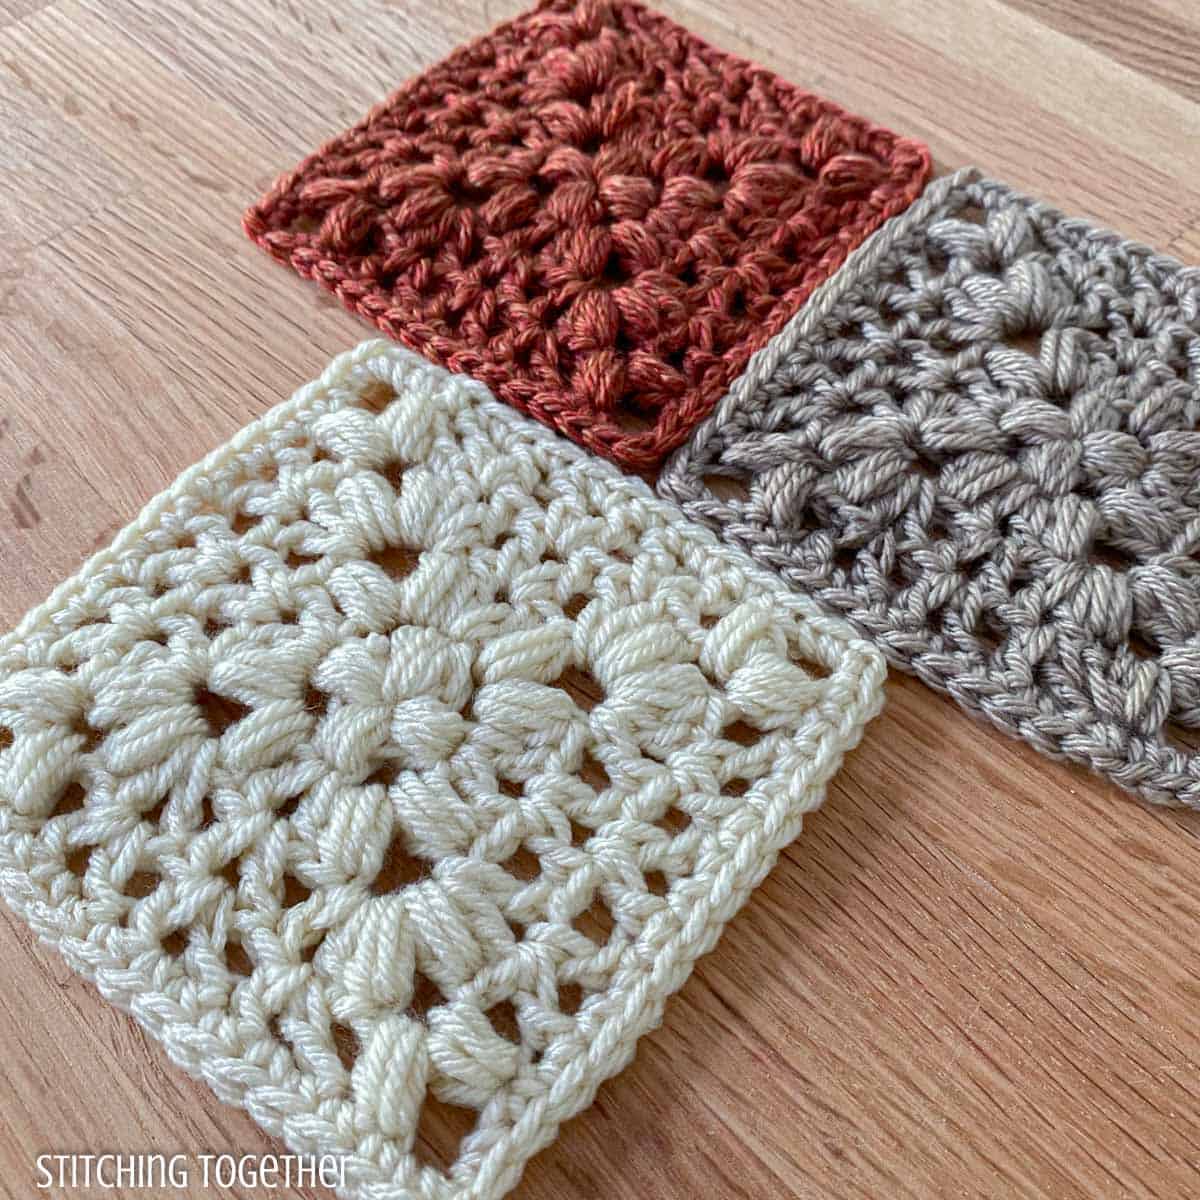 crochet granny squares